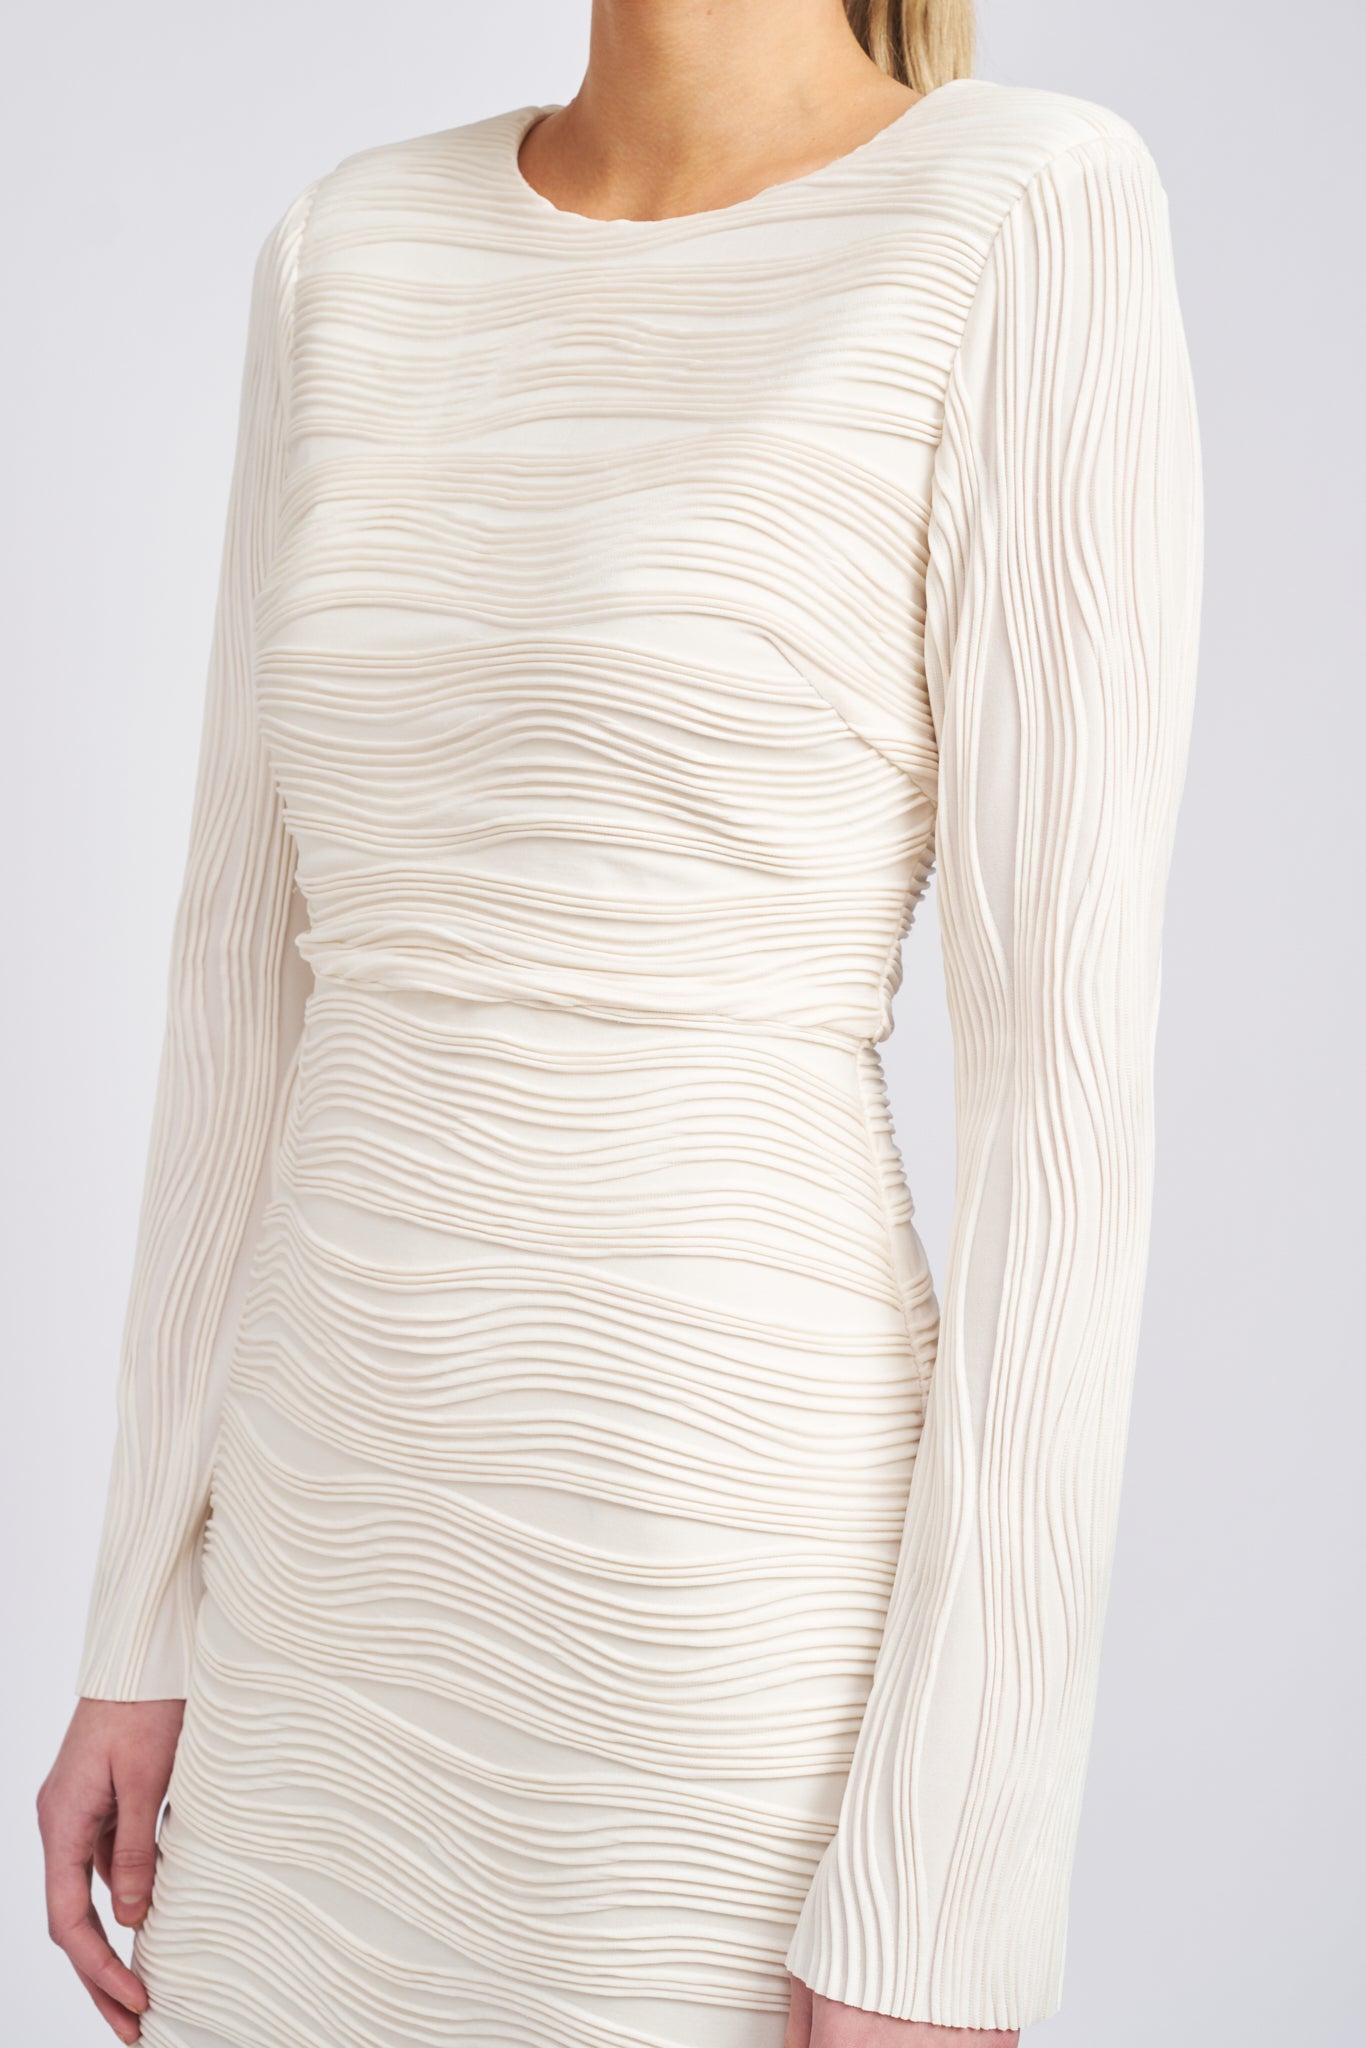 Vivian Mini Dress in Ivory